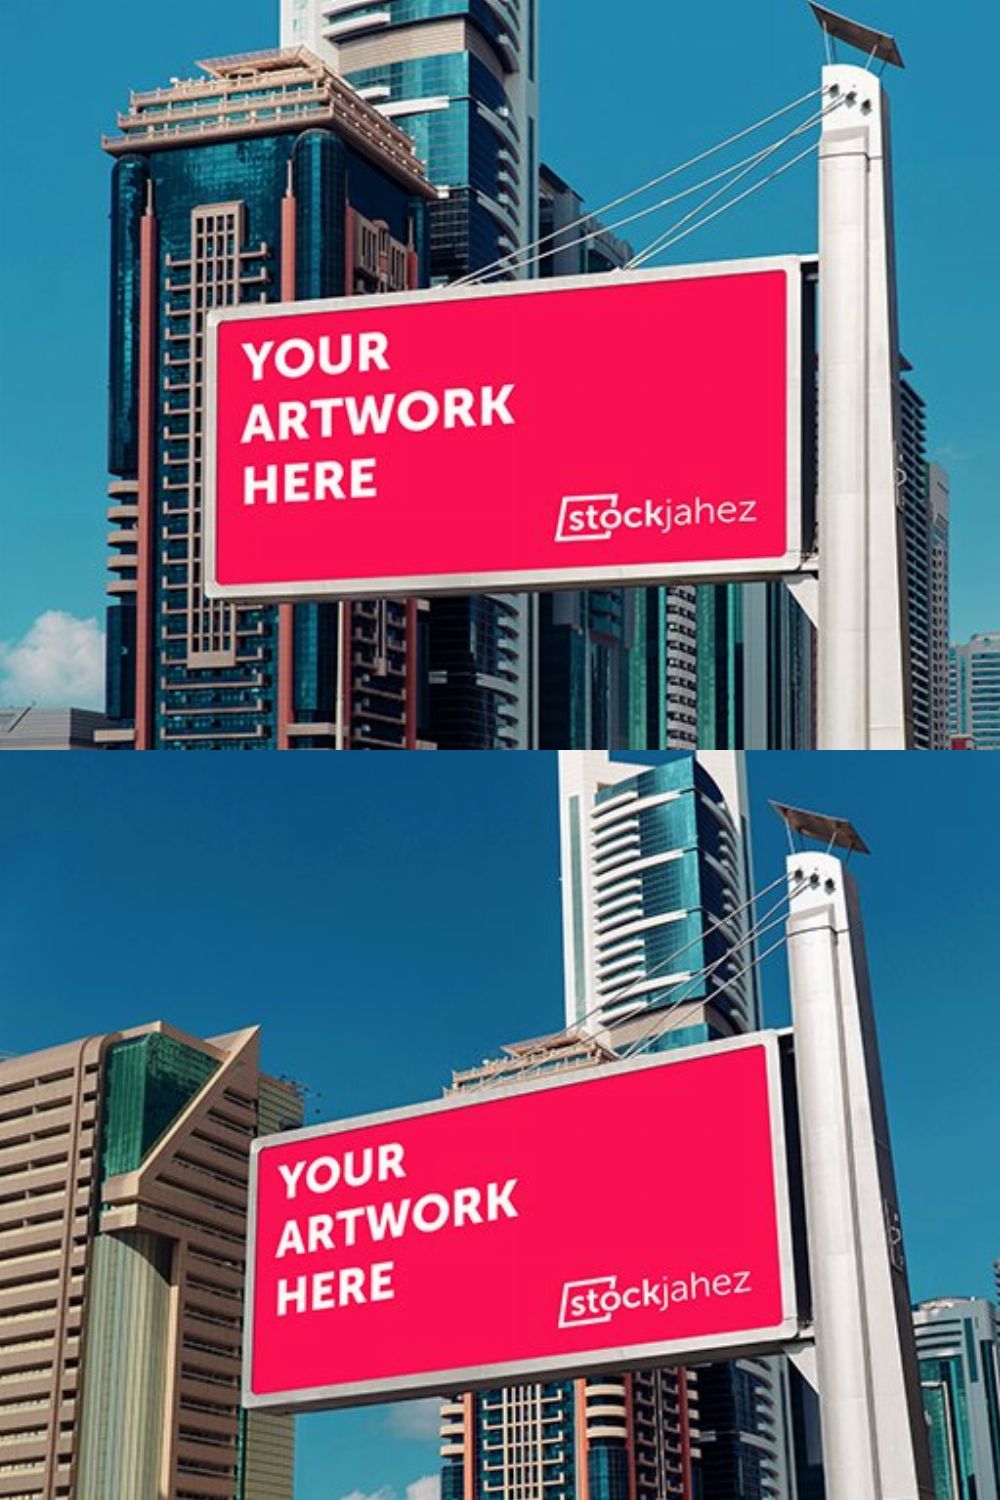 Sheikh Zayed Road billboard mockup pinterest preview image.